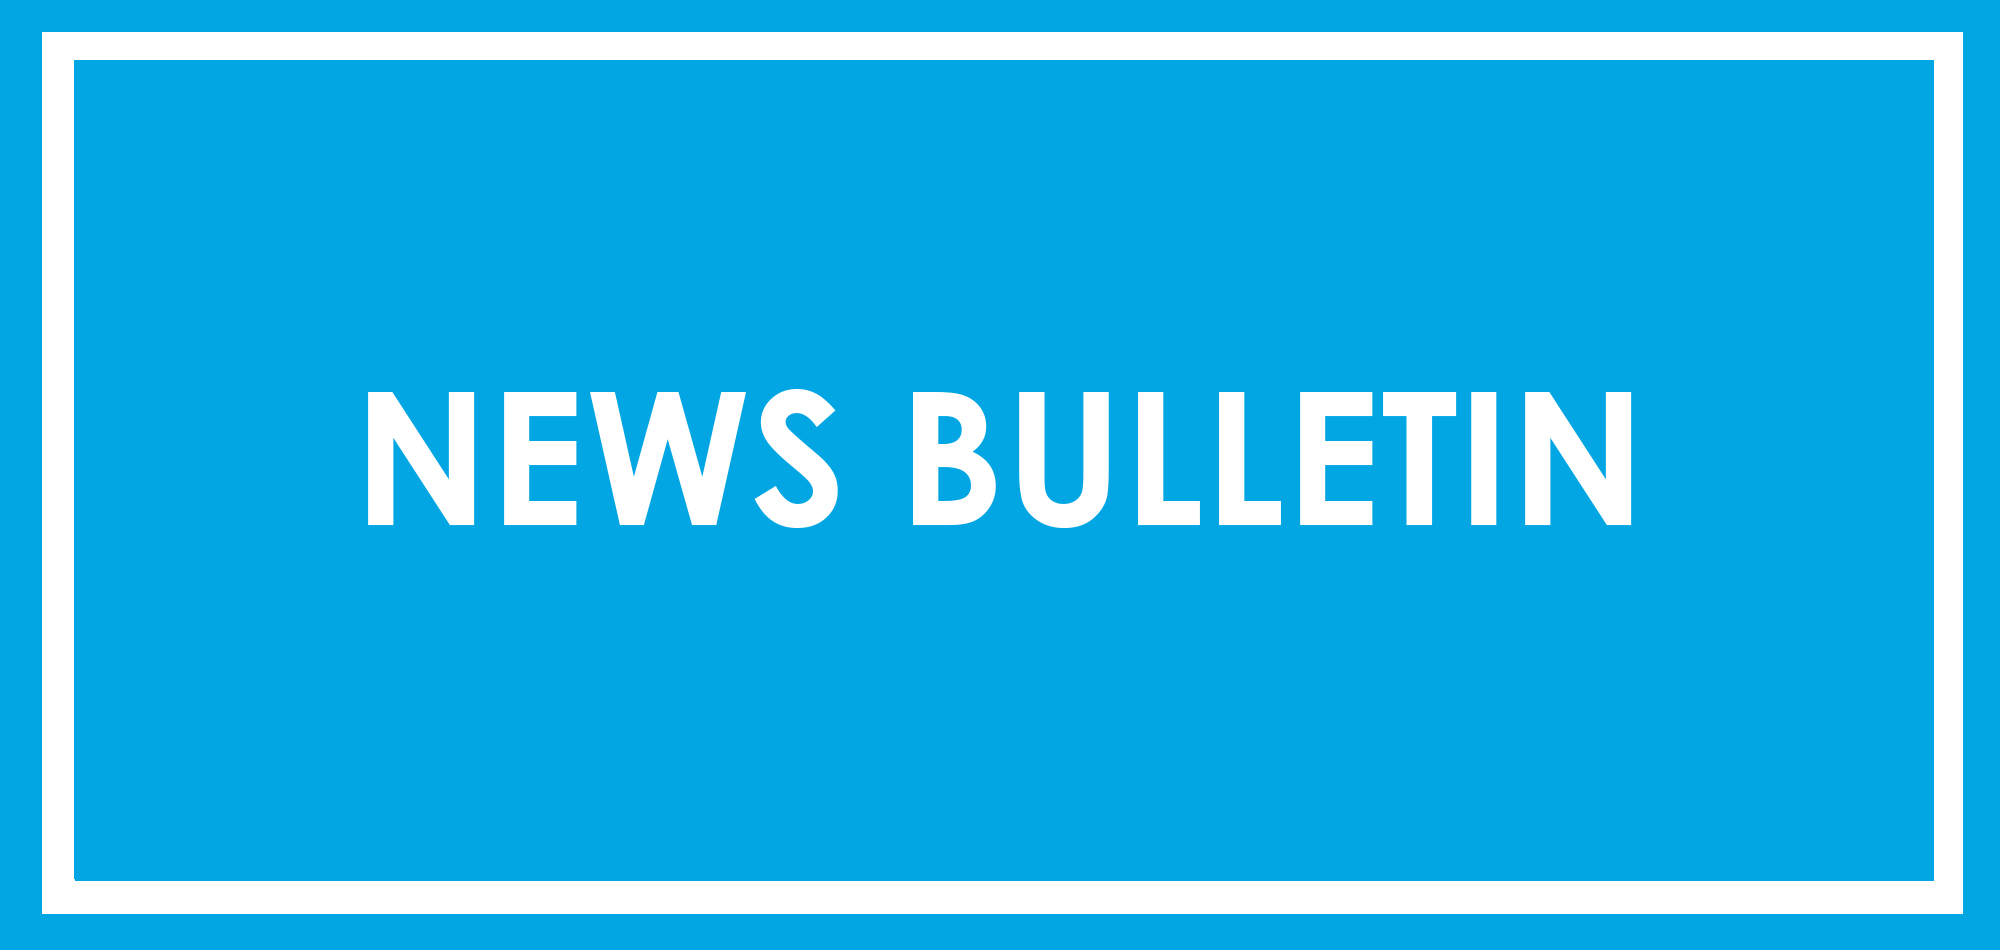 News Bulletin - 20.07.21